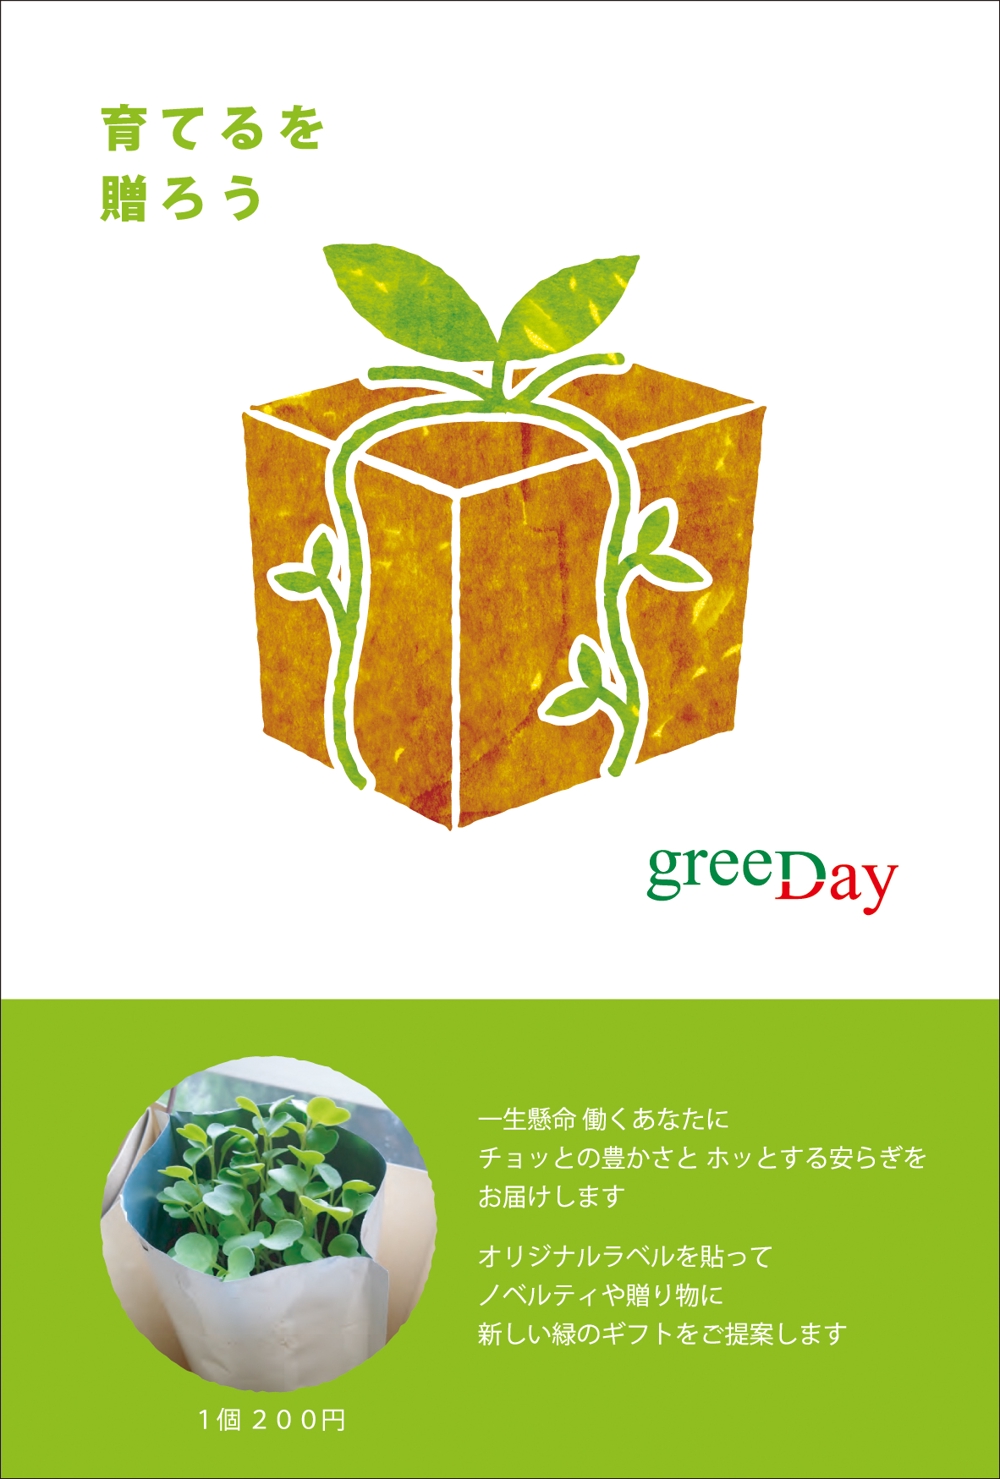 greenday.jpg